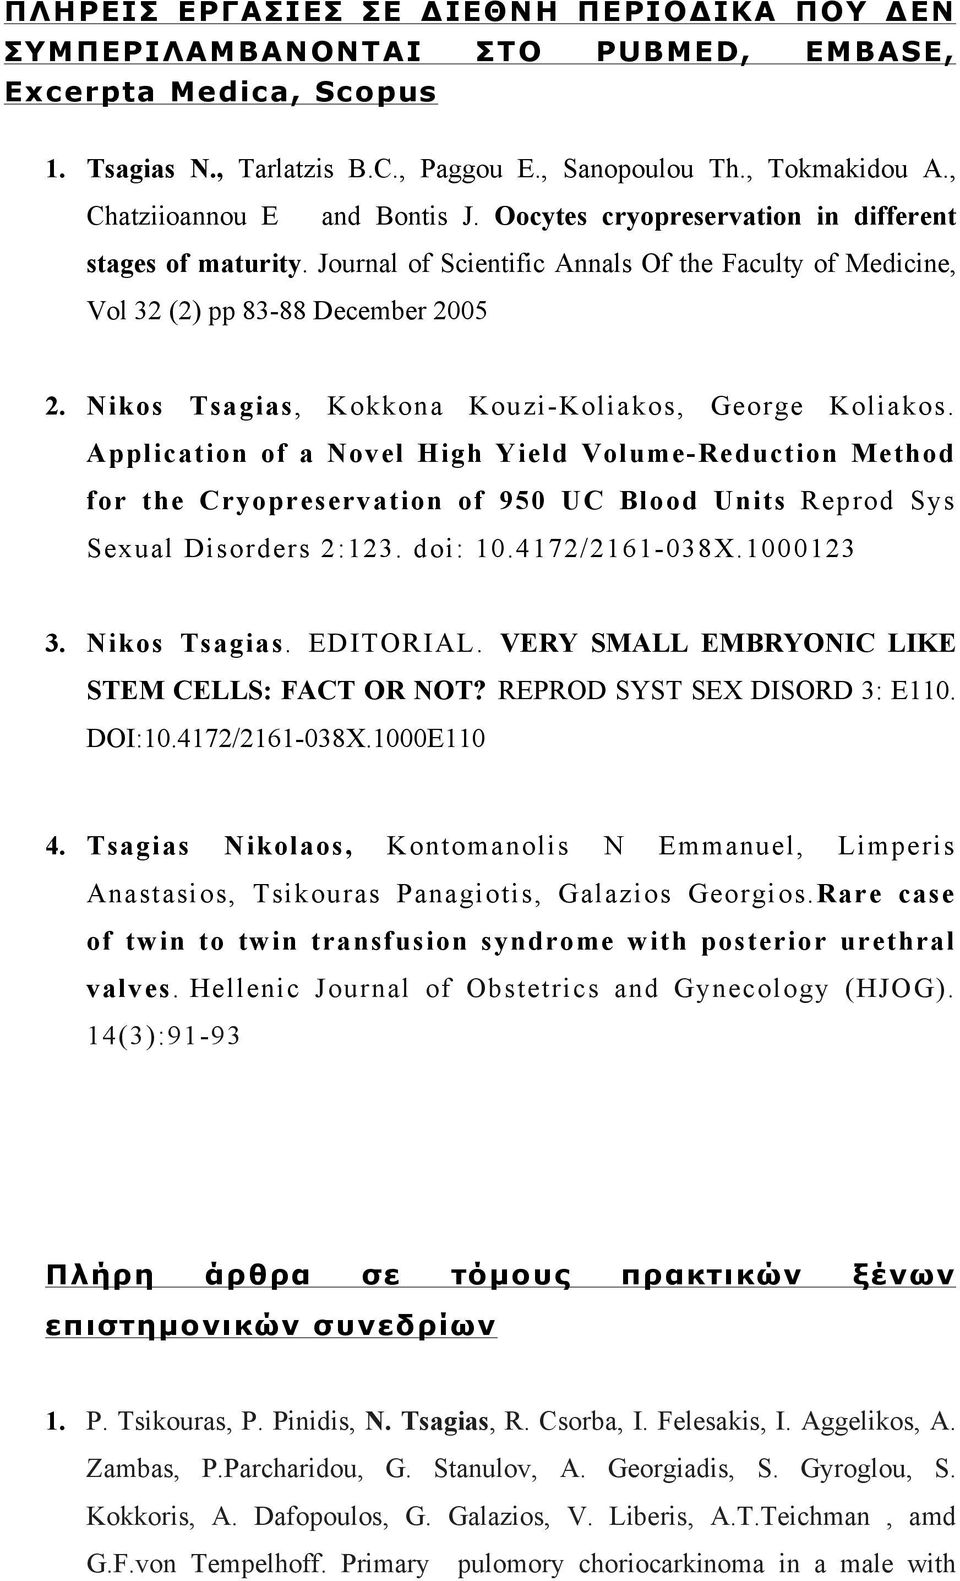 Nikos Tsagias, Kokkona Kouzi-Koliakos, George Koliakos. Application of a Novel High Yield Volume-Reduction Method for the Cryopreservation of 950 UC Blood Units Reprod Sys Sexual Disorders 2:123.